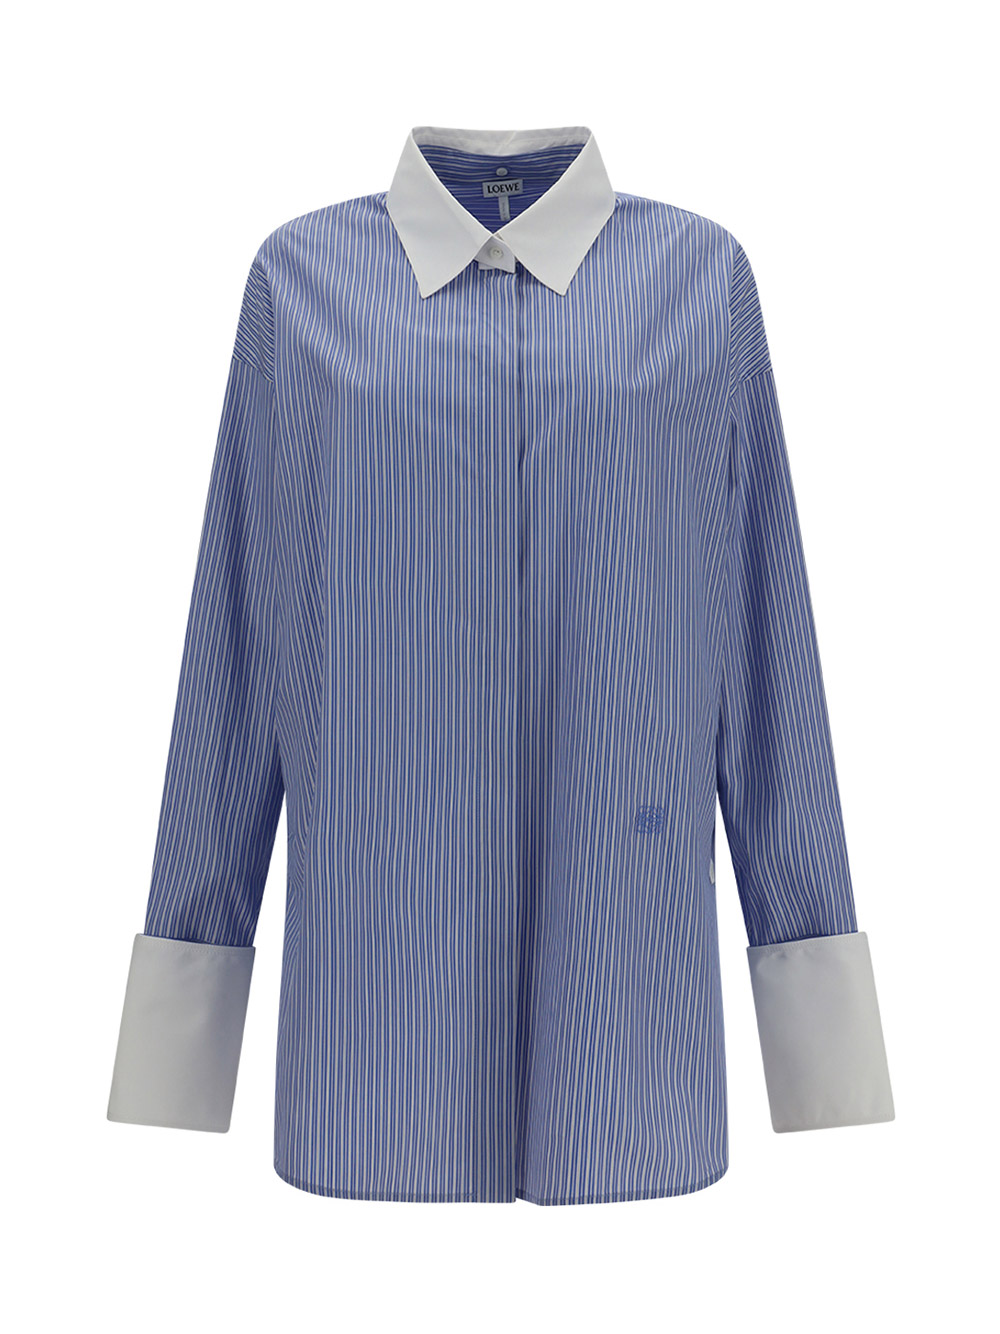 Loewe Striped Cotton Poplin Shirt In Blue/white